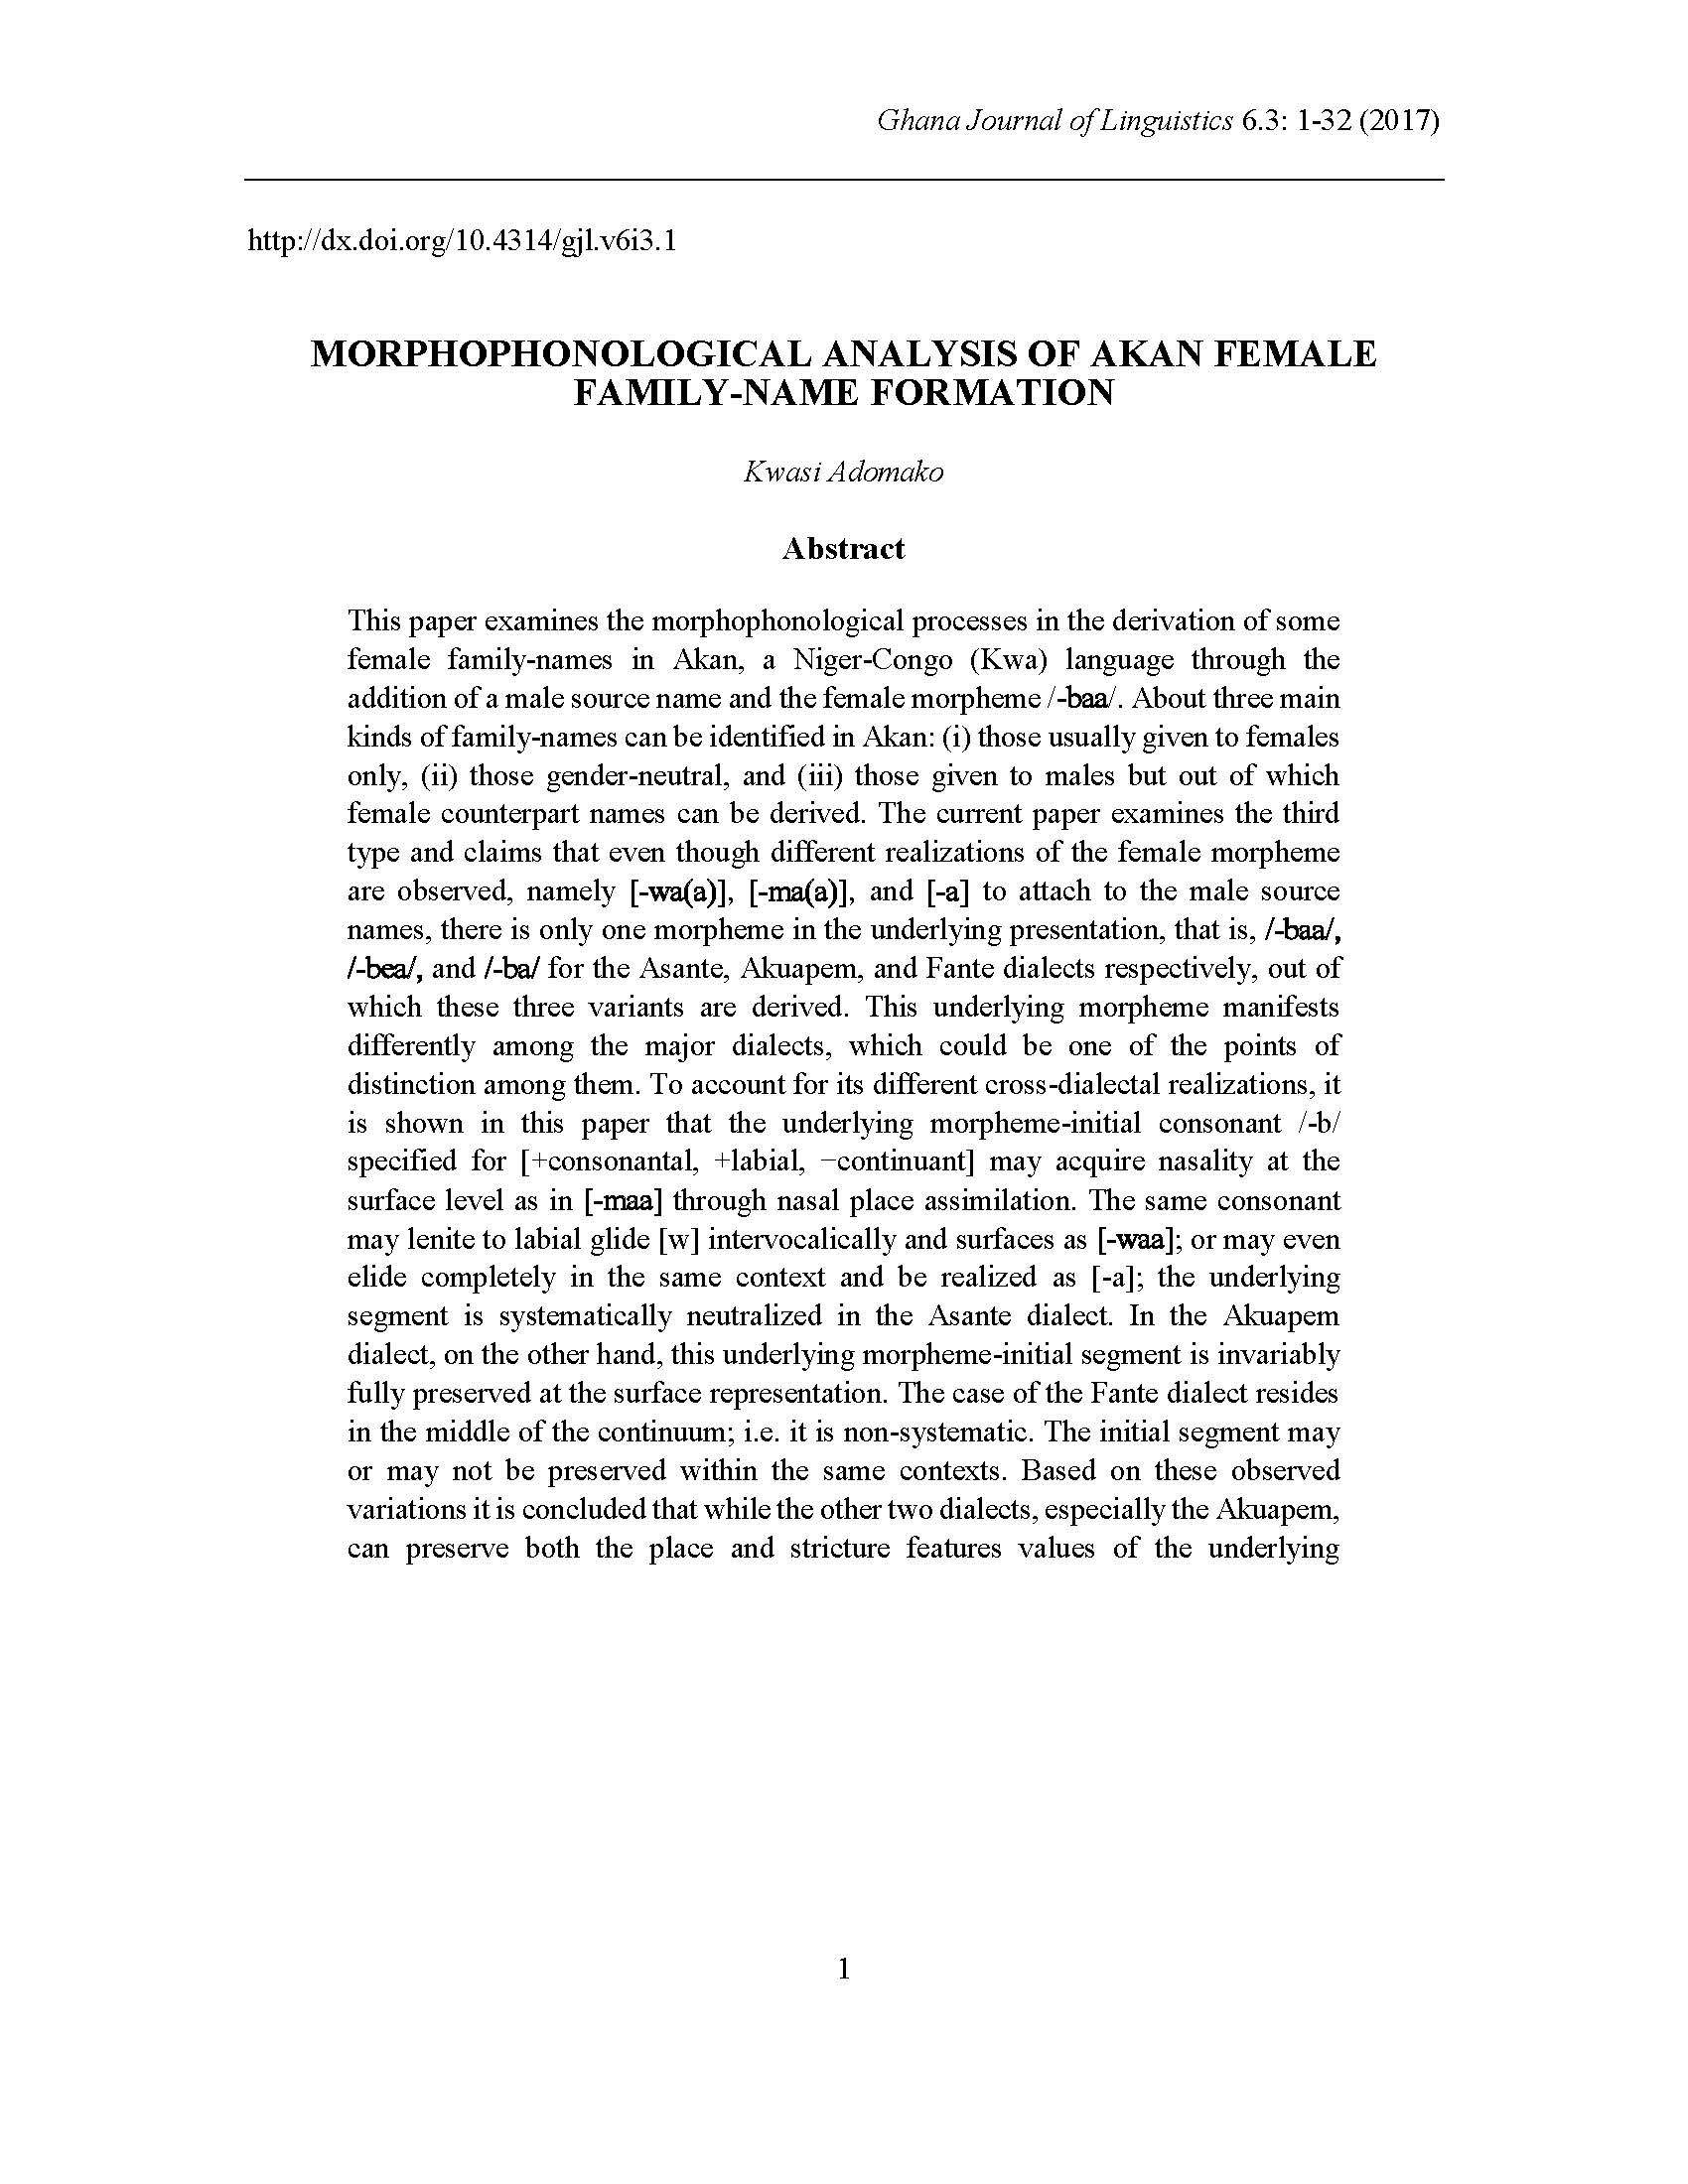 Adomako: Morphophonological Analysis of Akan Female Family-Name Formation